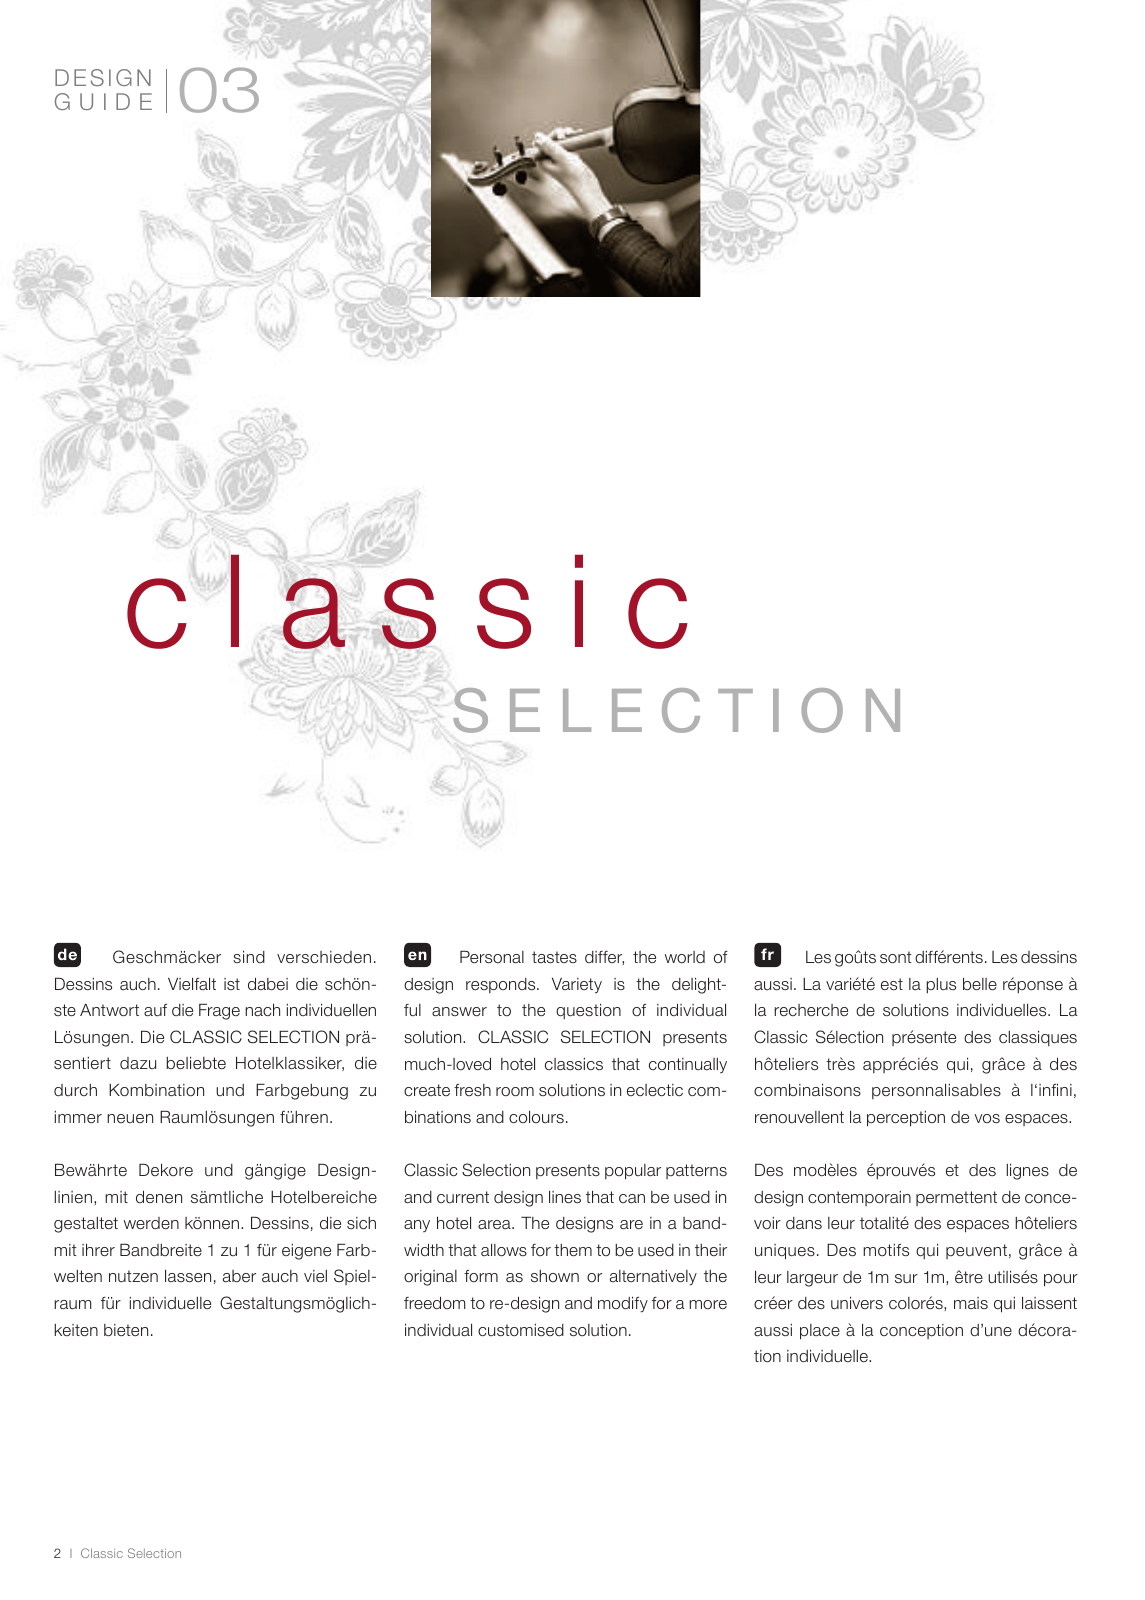 Vorschau DesignGuide03 - Classic Selection Seite 2